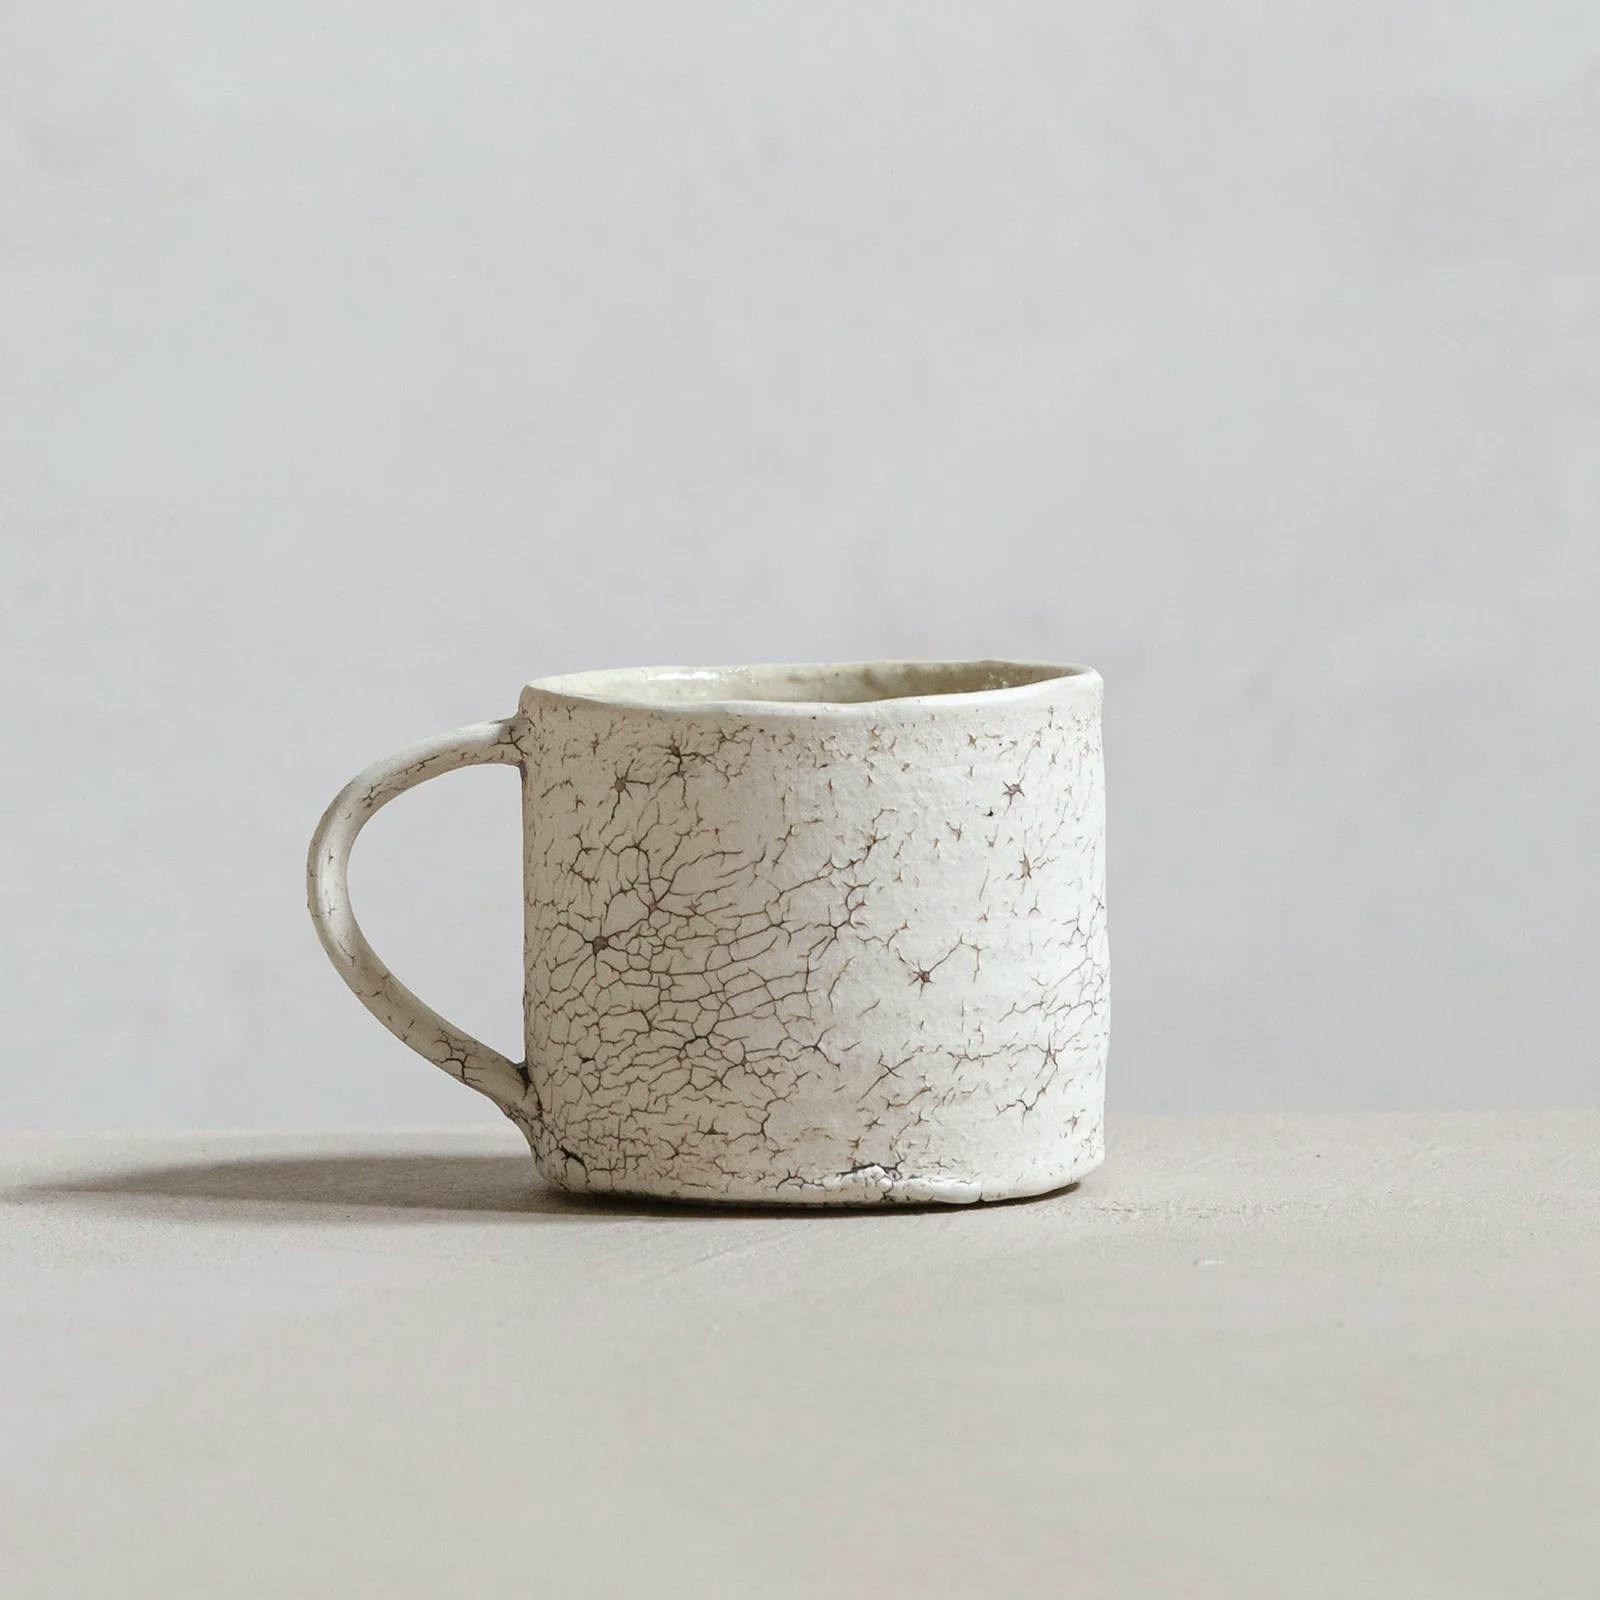 Image of ceramic mug